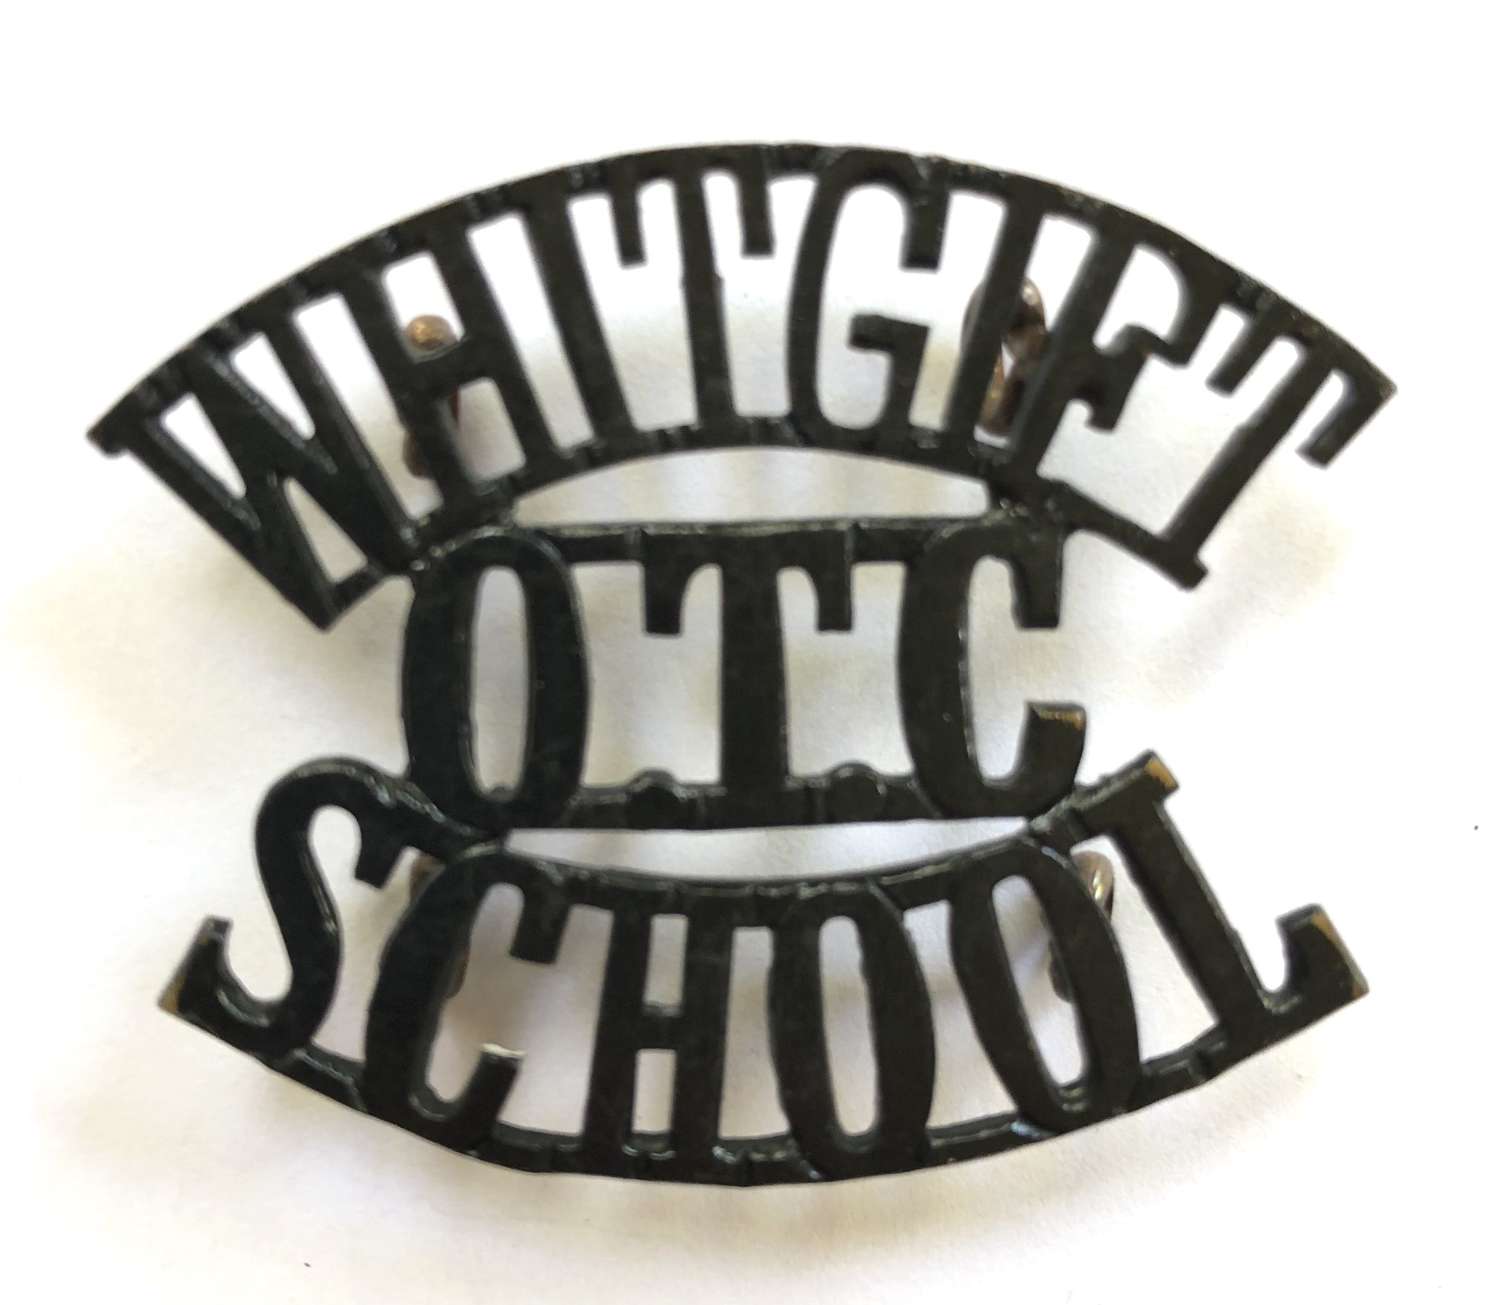 WHITGIFT / OTC / SCHOOL Croyden shoulder title circa 1908-40